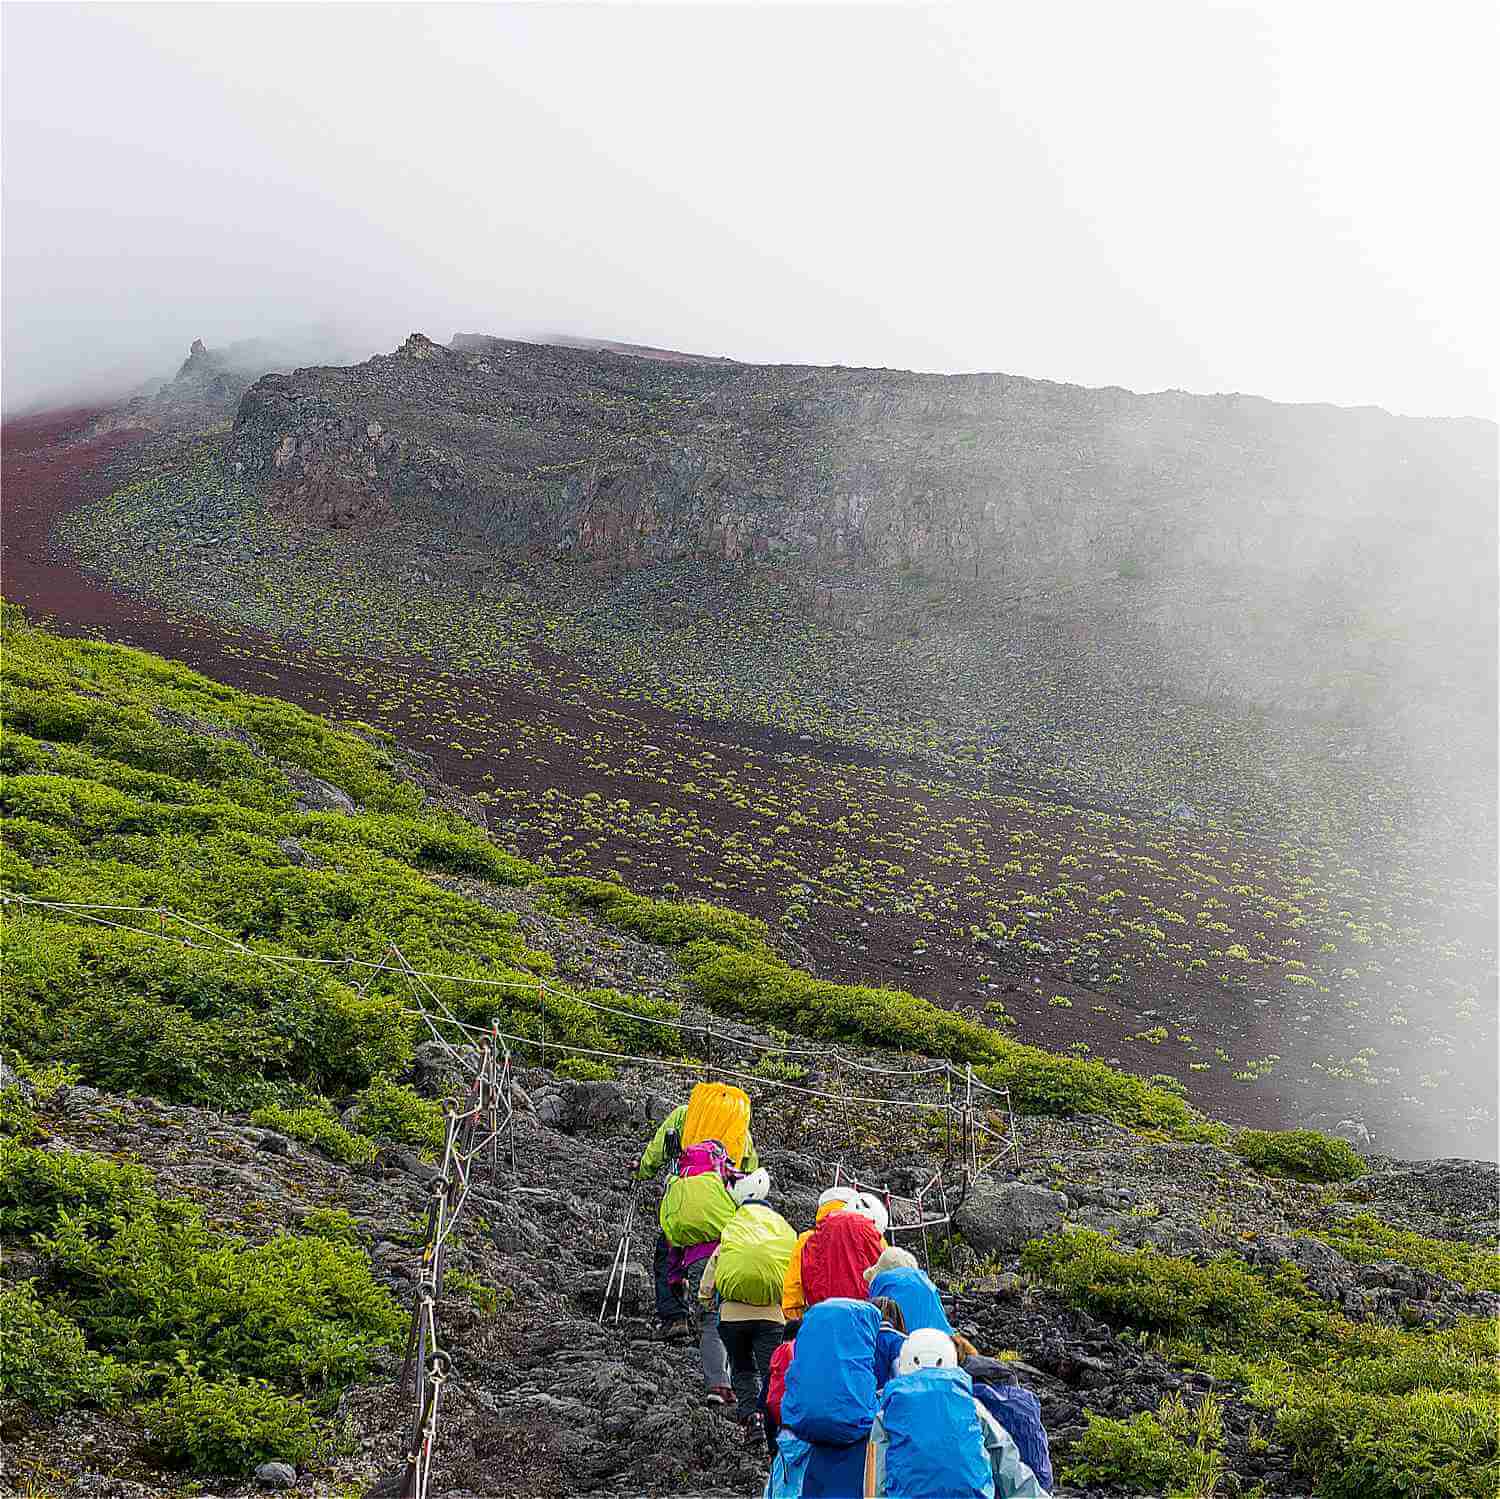 Climbing Mt. Fuji in summer = Shutterstock 3